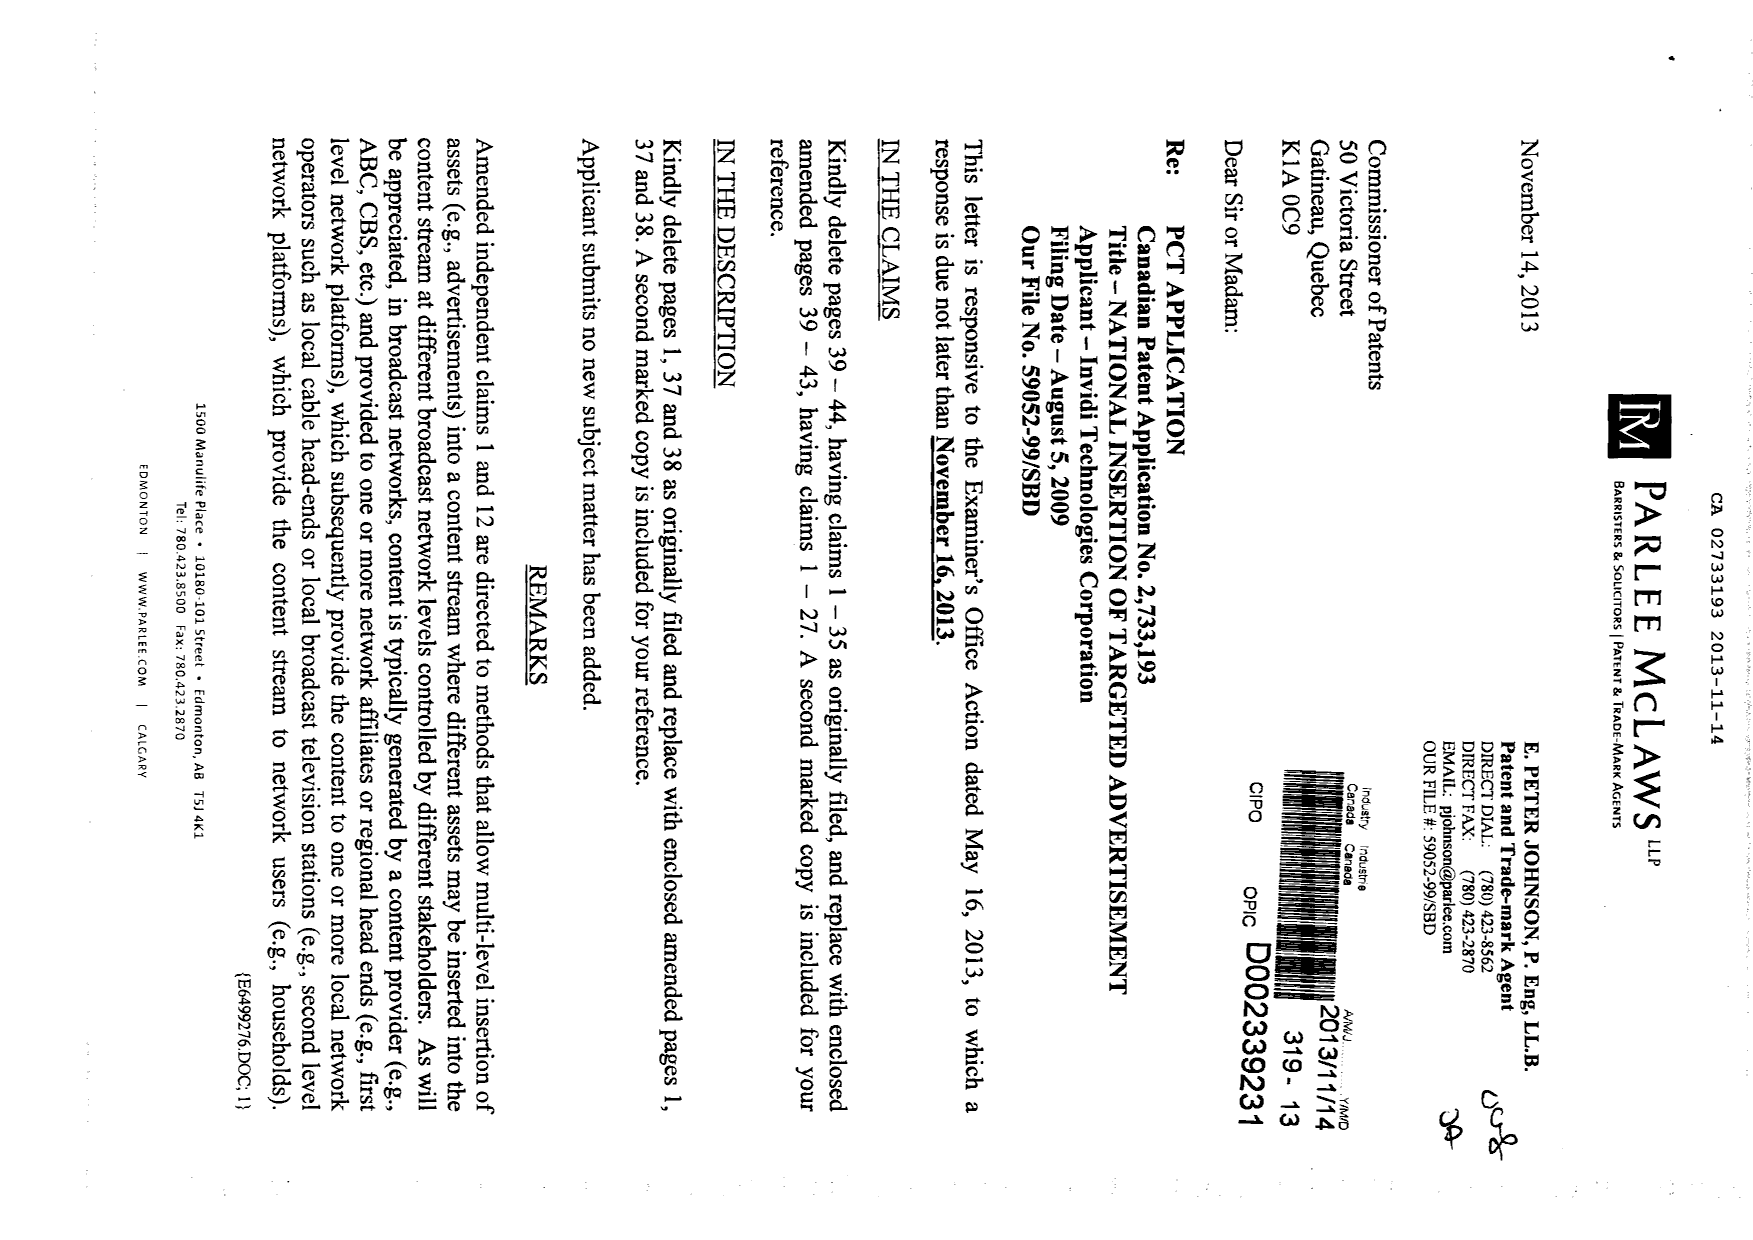 Canadian Patent Document 2733193. Prosecution-Amendment 20121214. Image 1 of 23